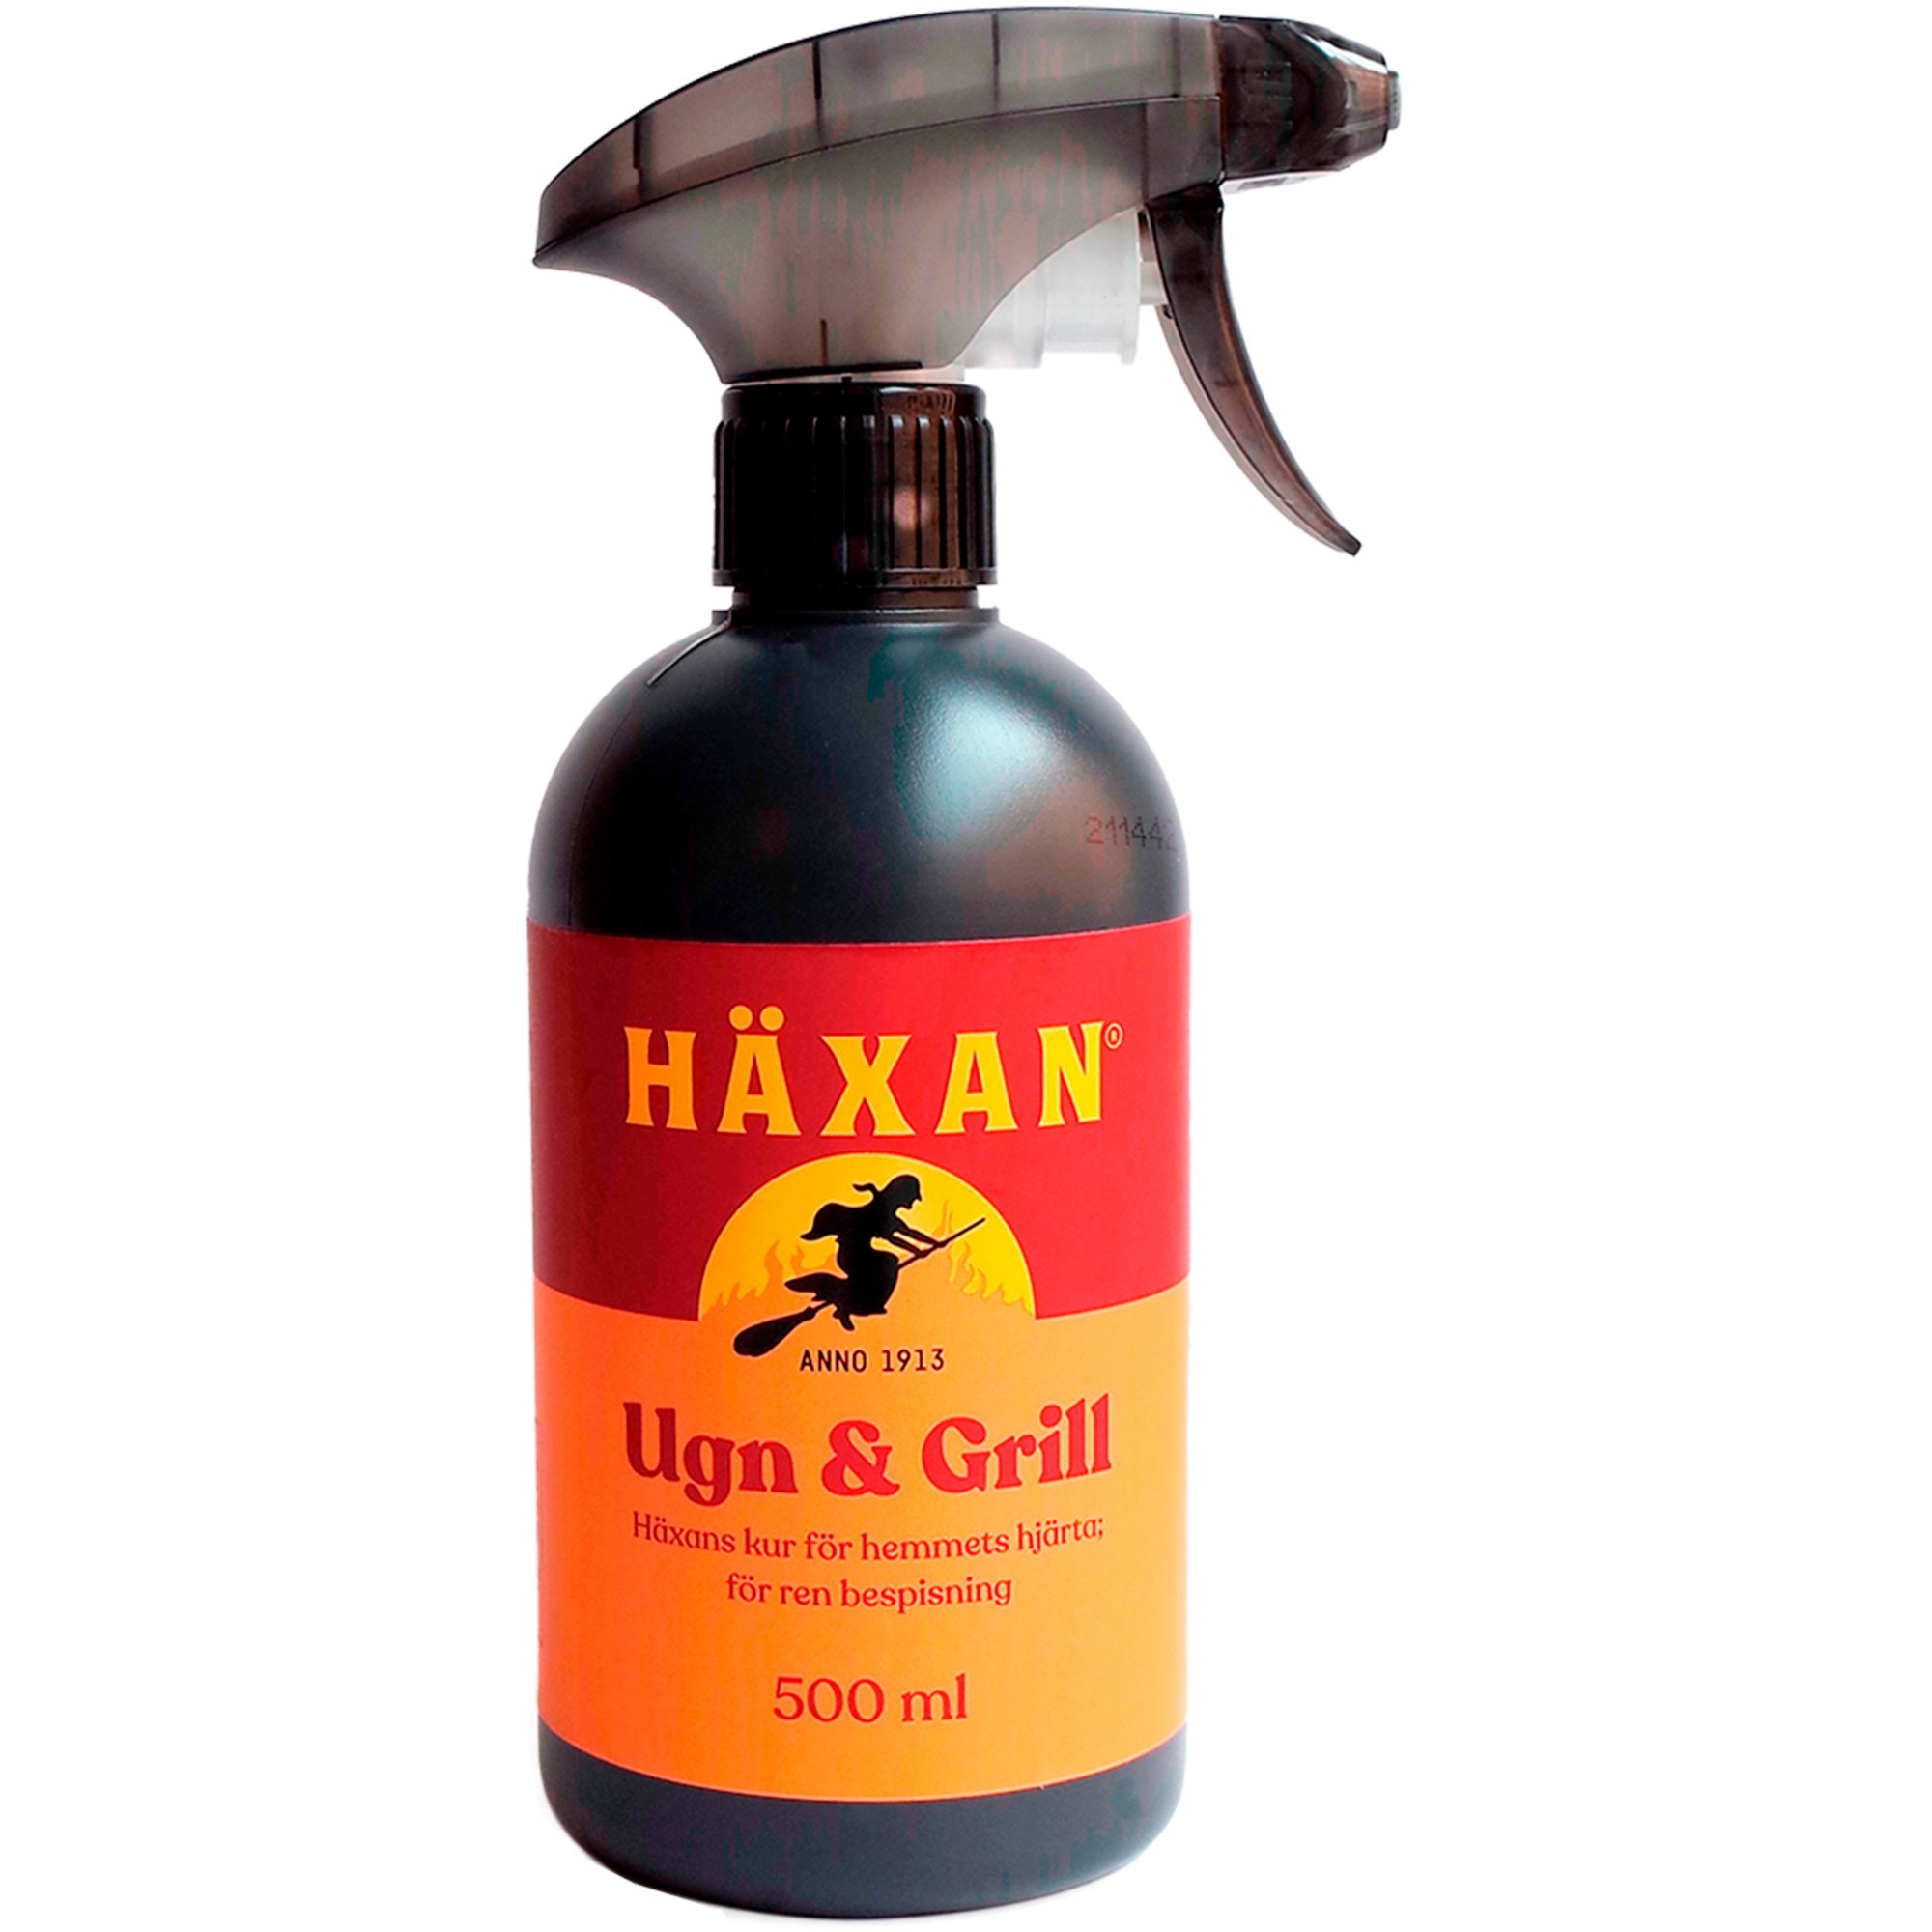 Häxan Ugn & grill